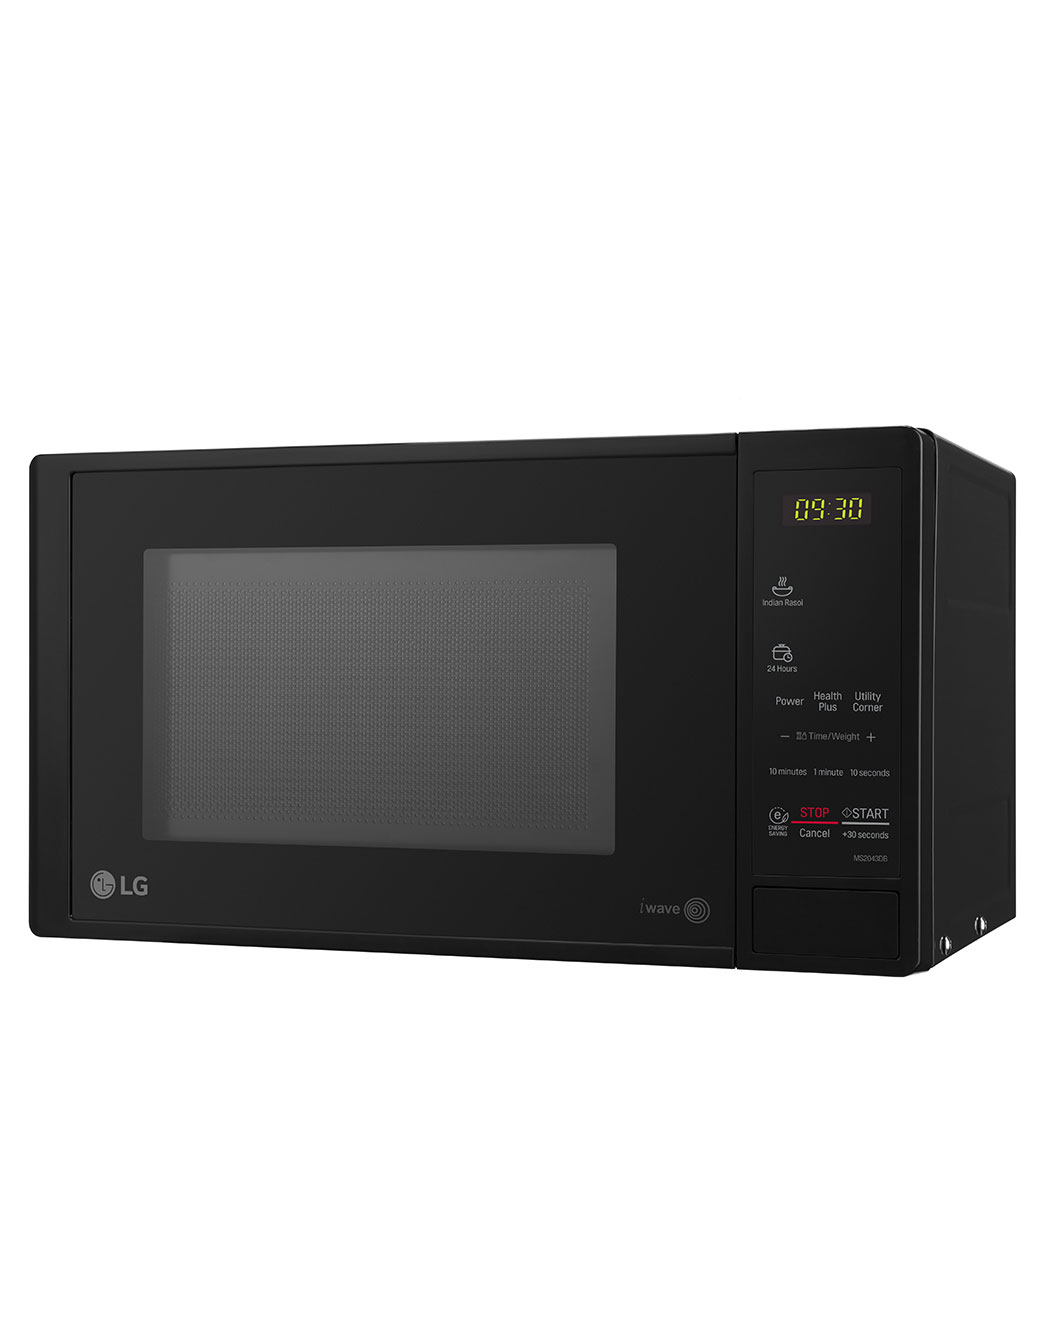 LG 20L Microwave | LG Electronics Sri Lanka